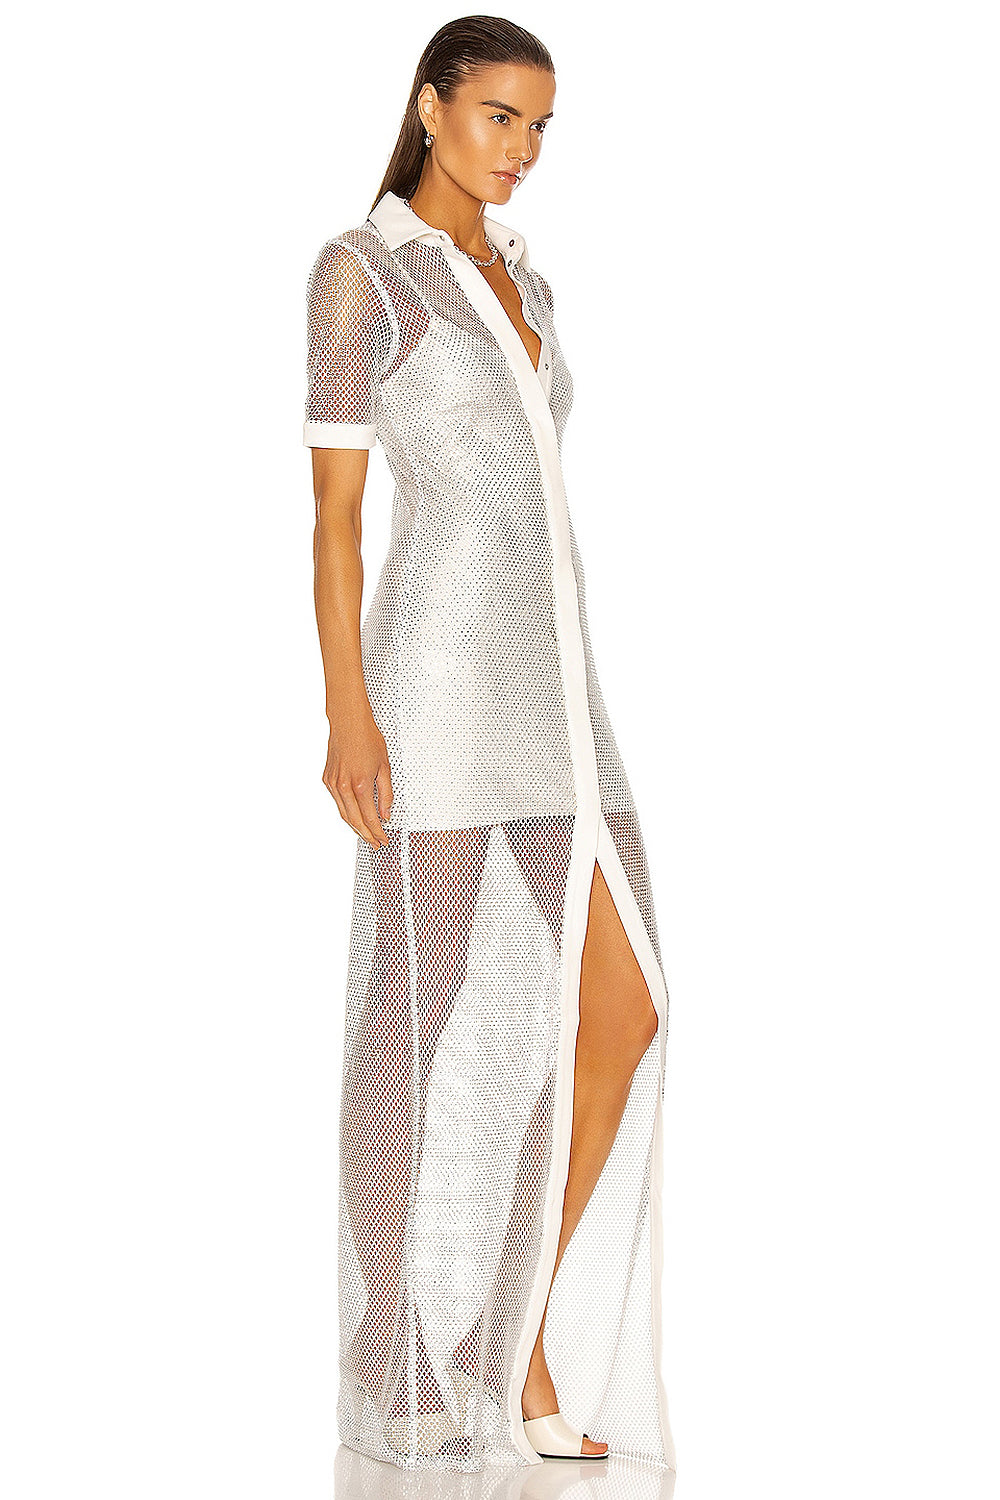 Silver Short-Sleeved Semi Transparent Fishnet Crystal Cardigan Beach Maxi Dress